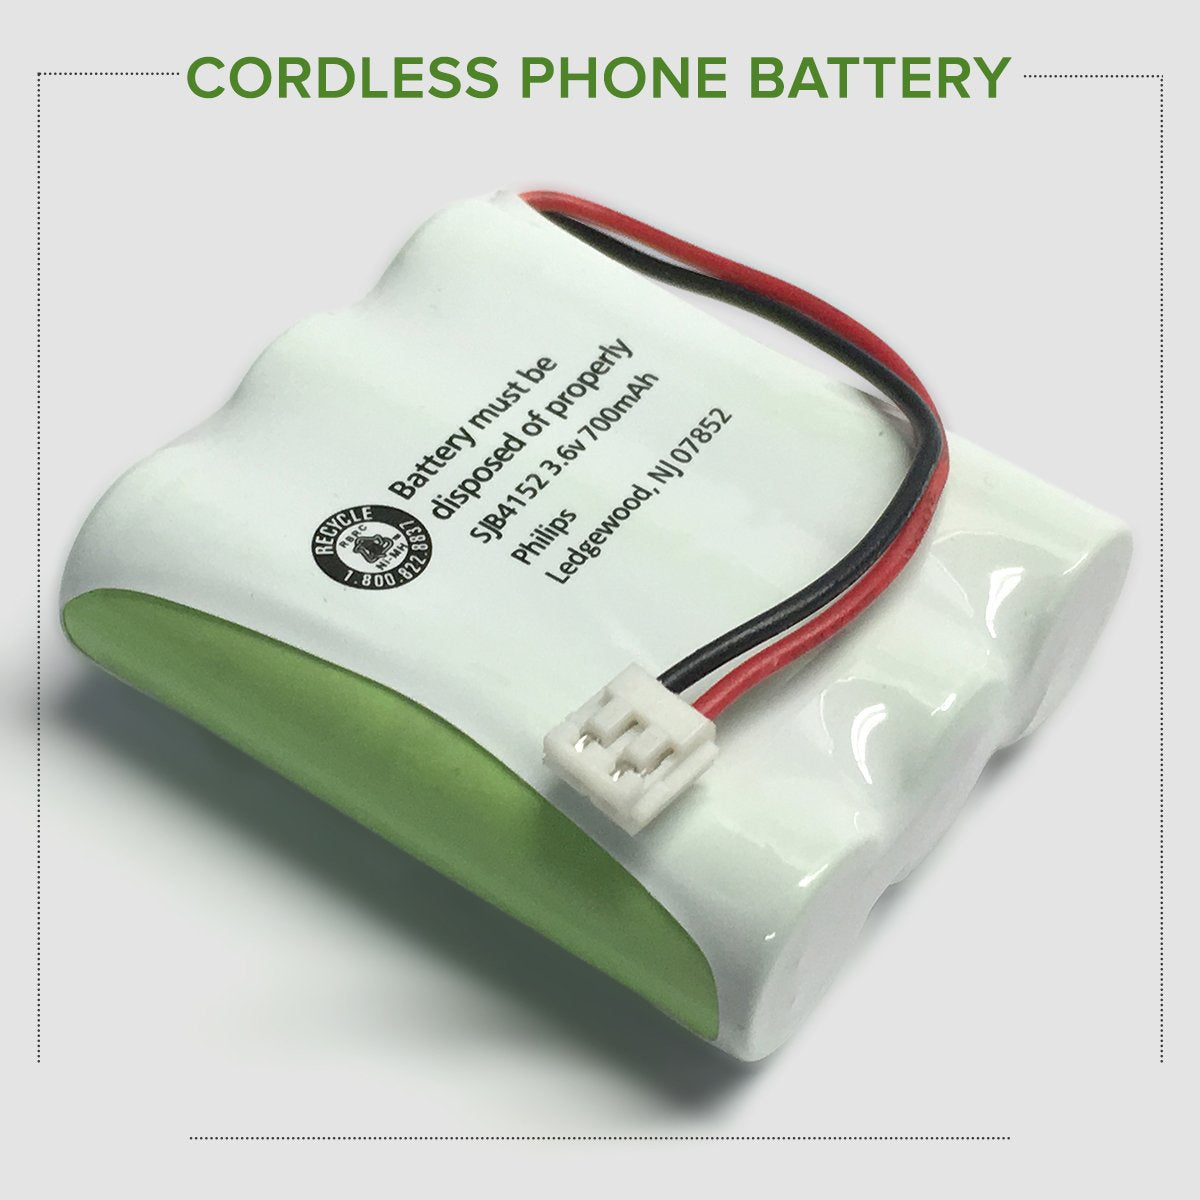 GE 2-7995 Cordless Phone Battery